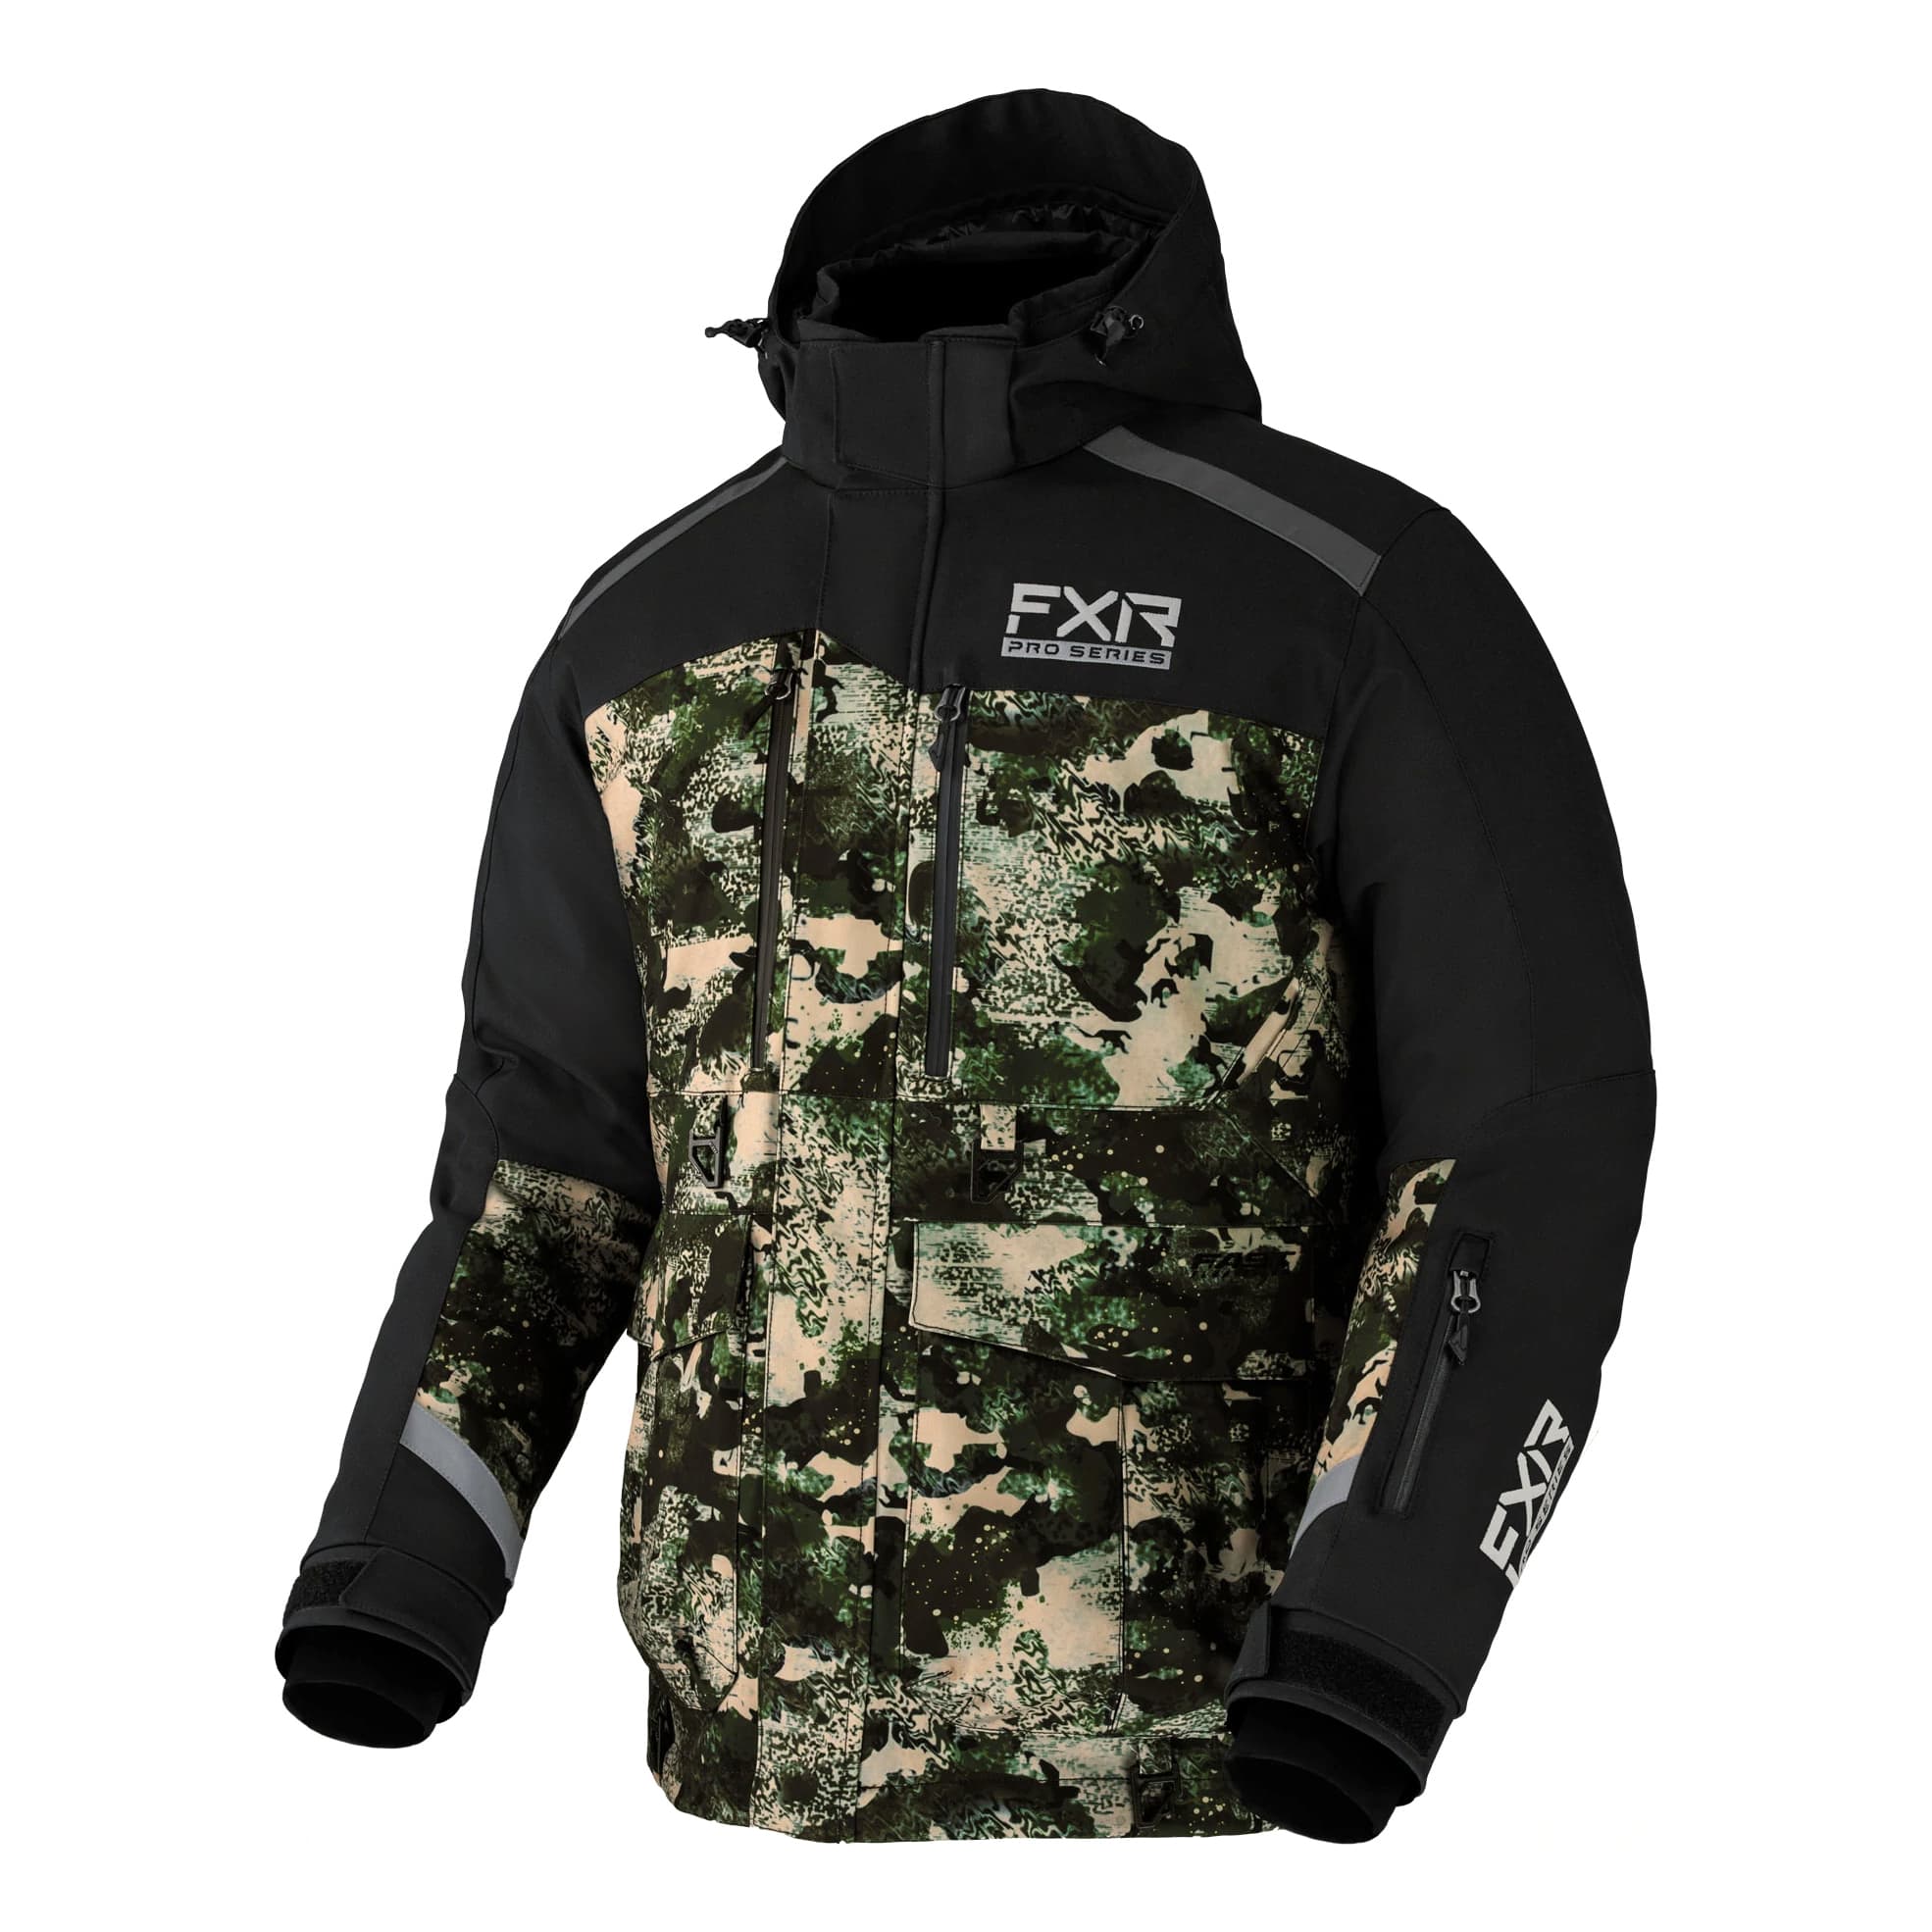 FXR® Men’s Expedition X Ice Pro Jacket